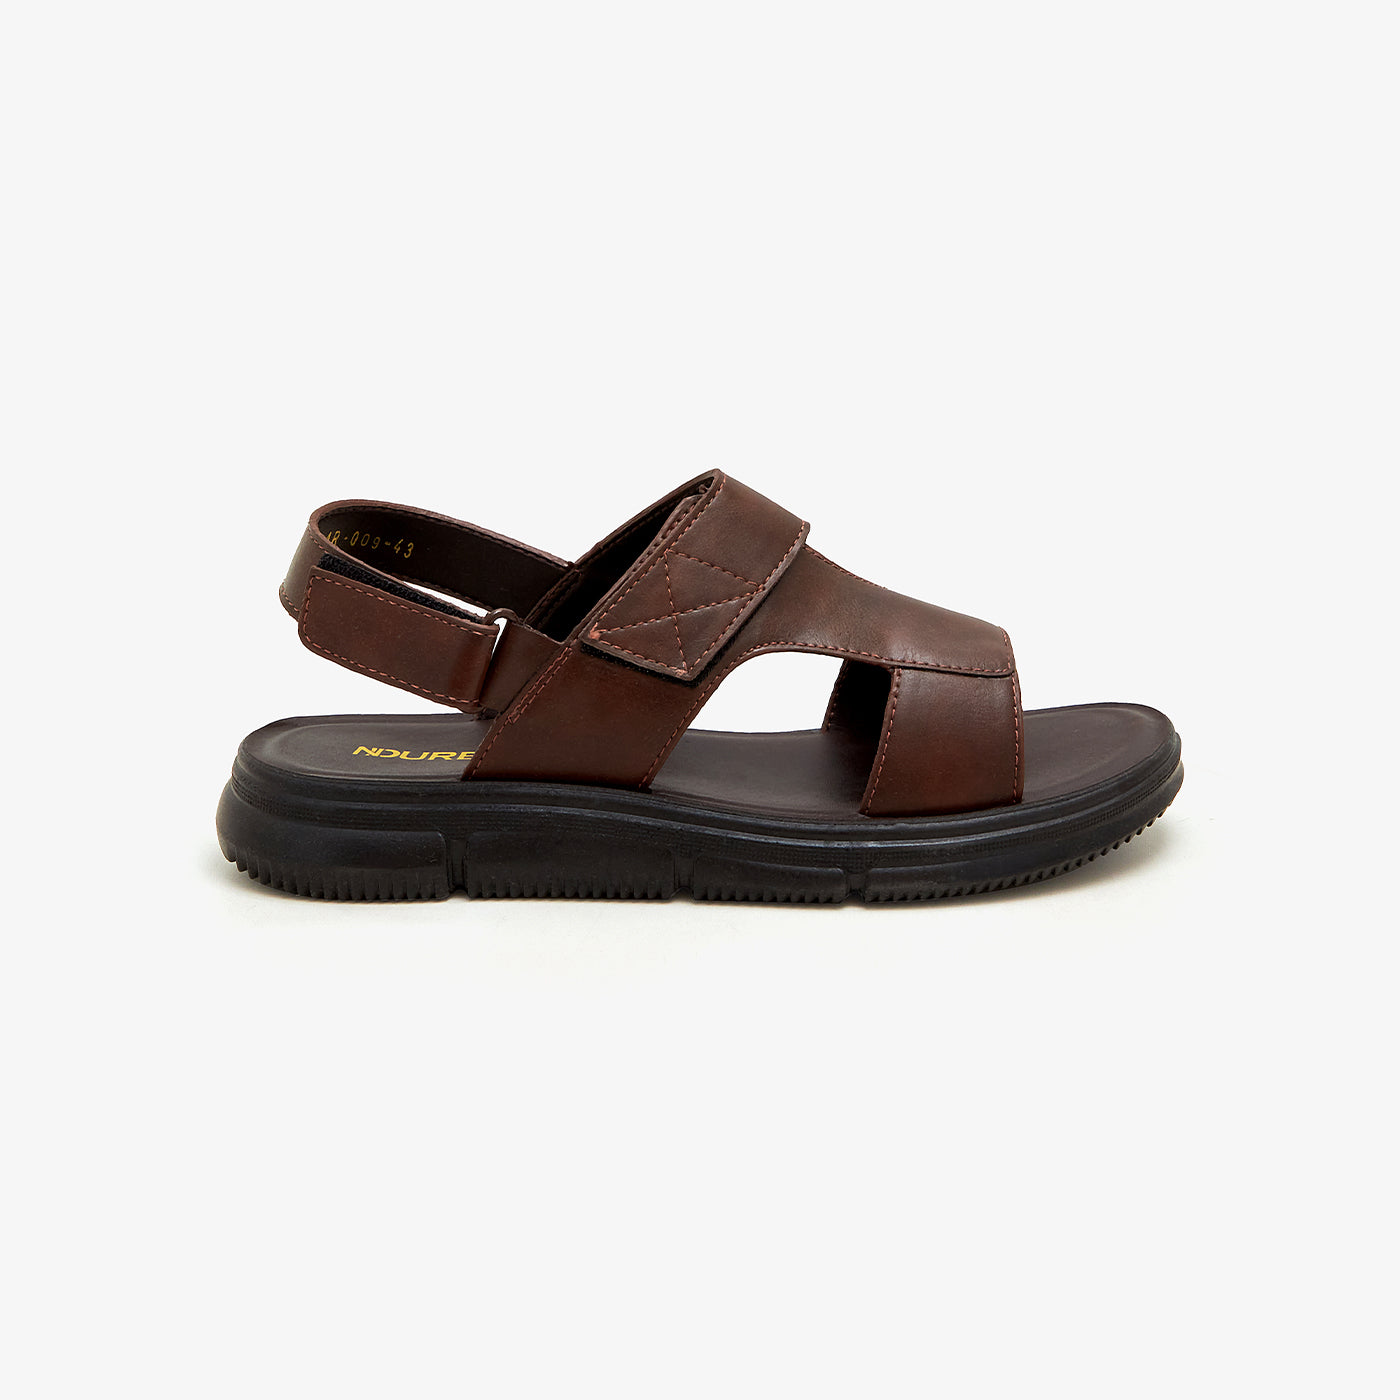 Dapper Sandals for Men